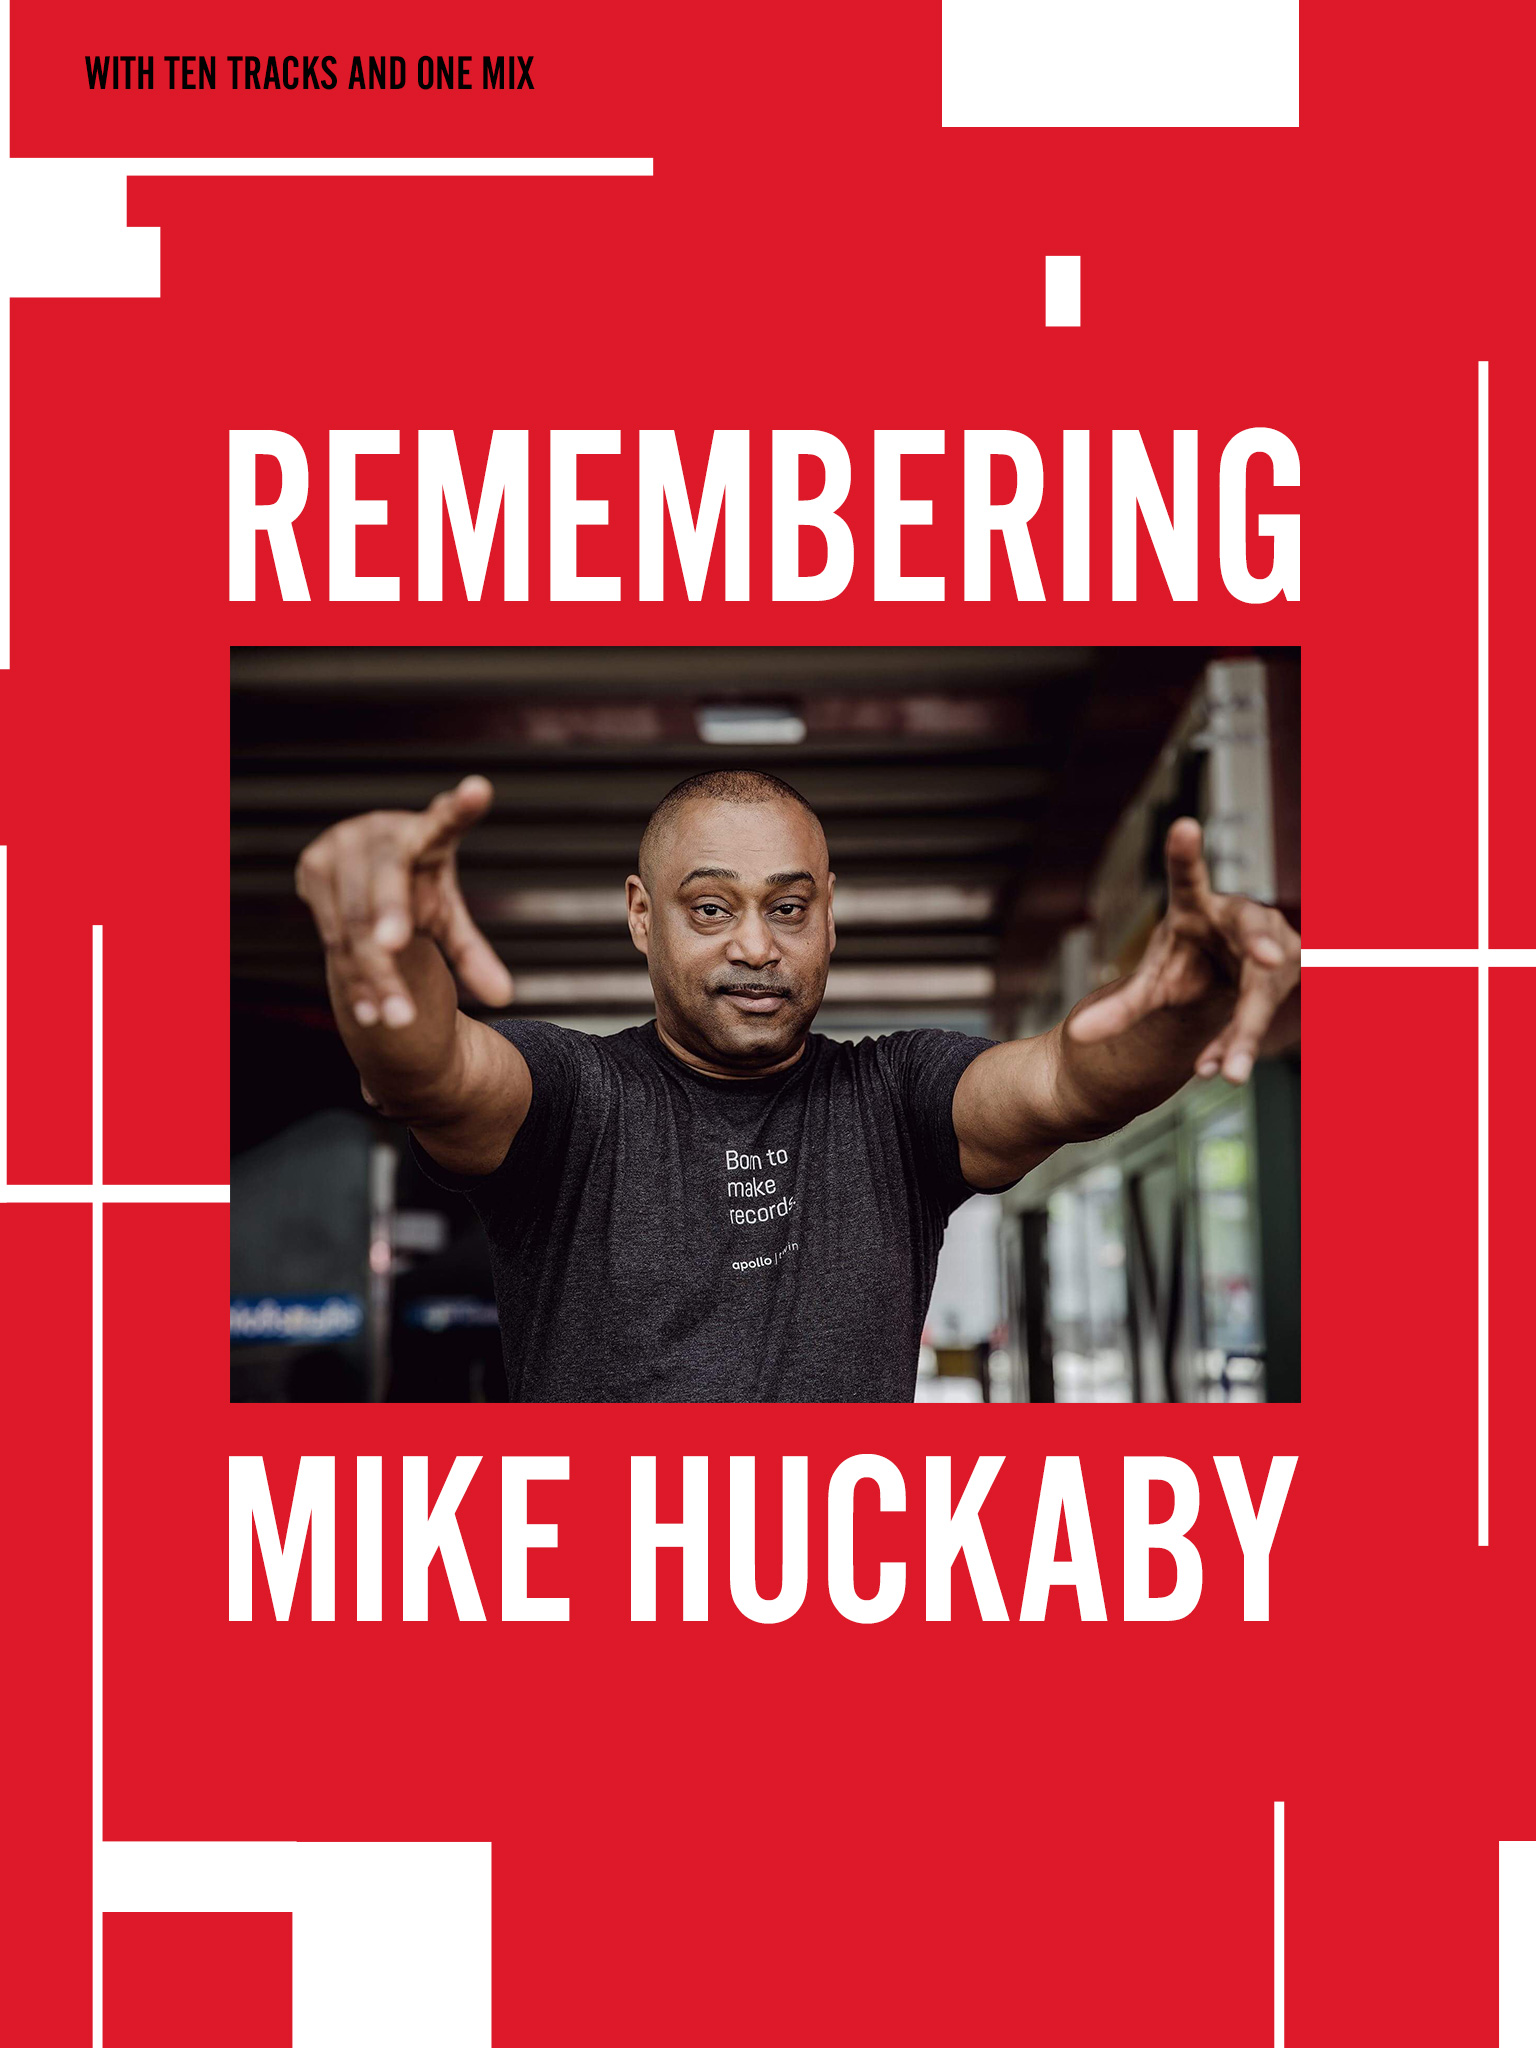 Mike Huckabyを偲んで: 10曲と1本のミックス